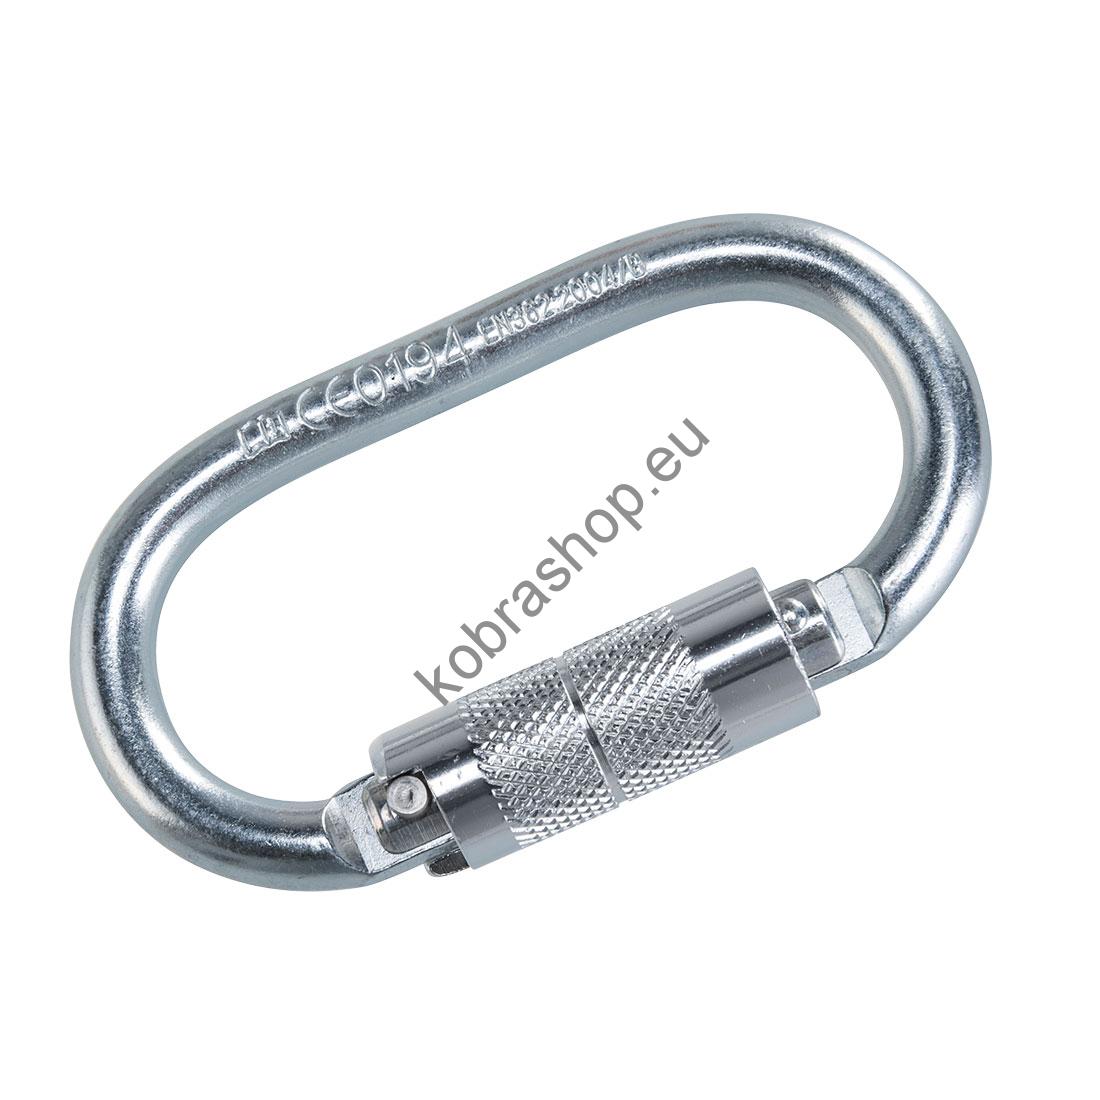 FP33 - Twist Lock karabína